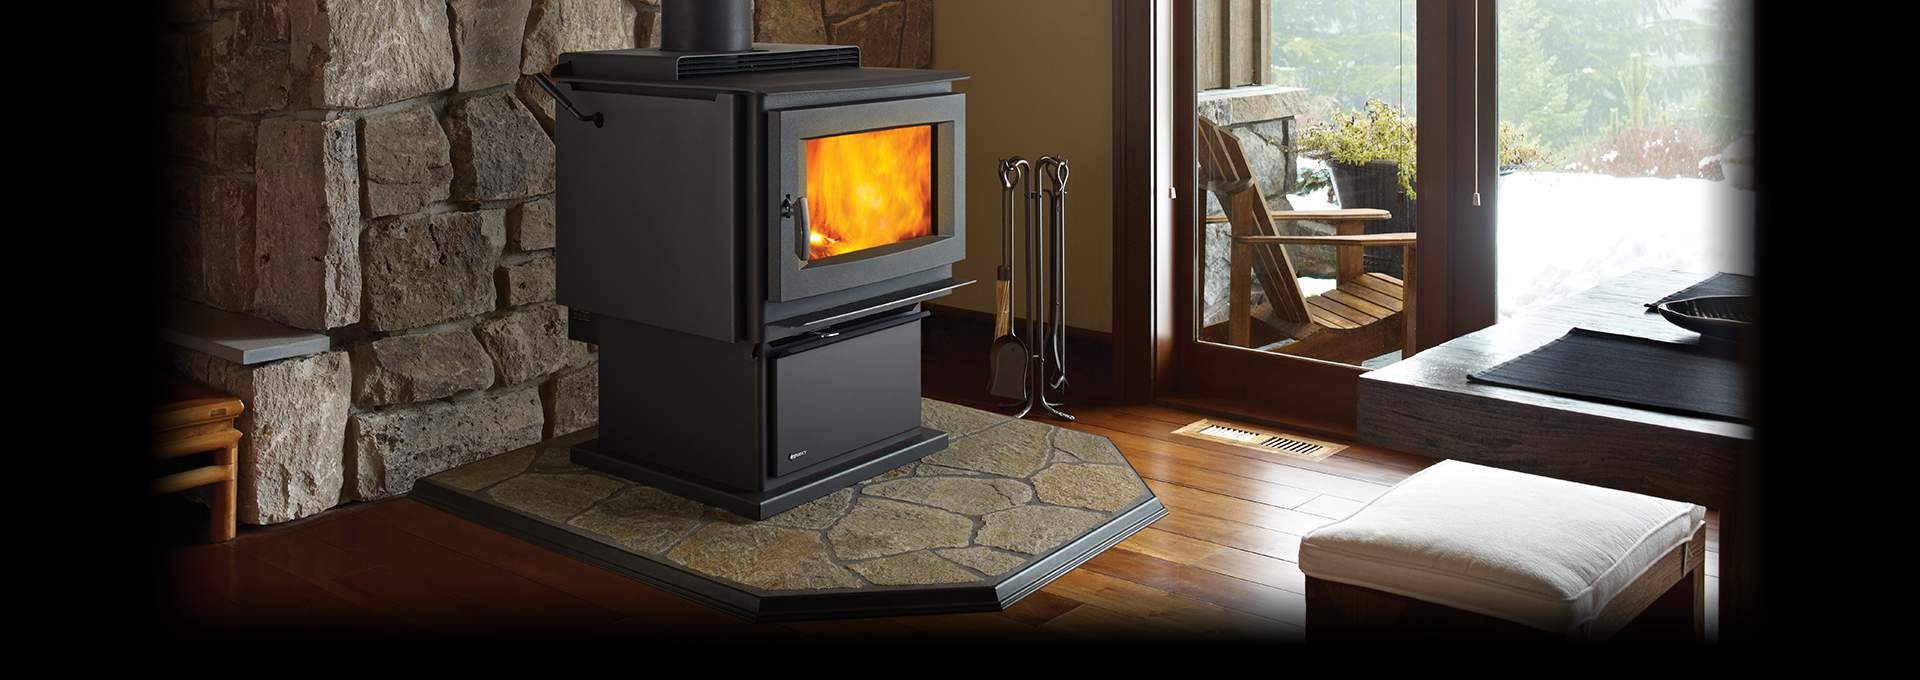 Floor Fireplace Elegant 26 Re Mended Hardwood Floor Fireplace Transition